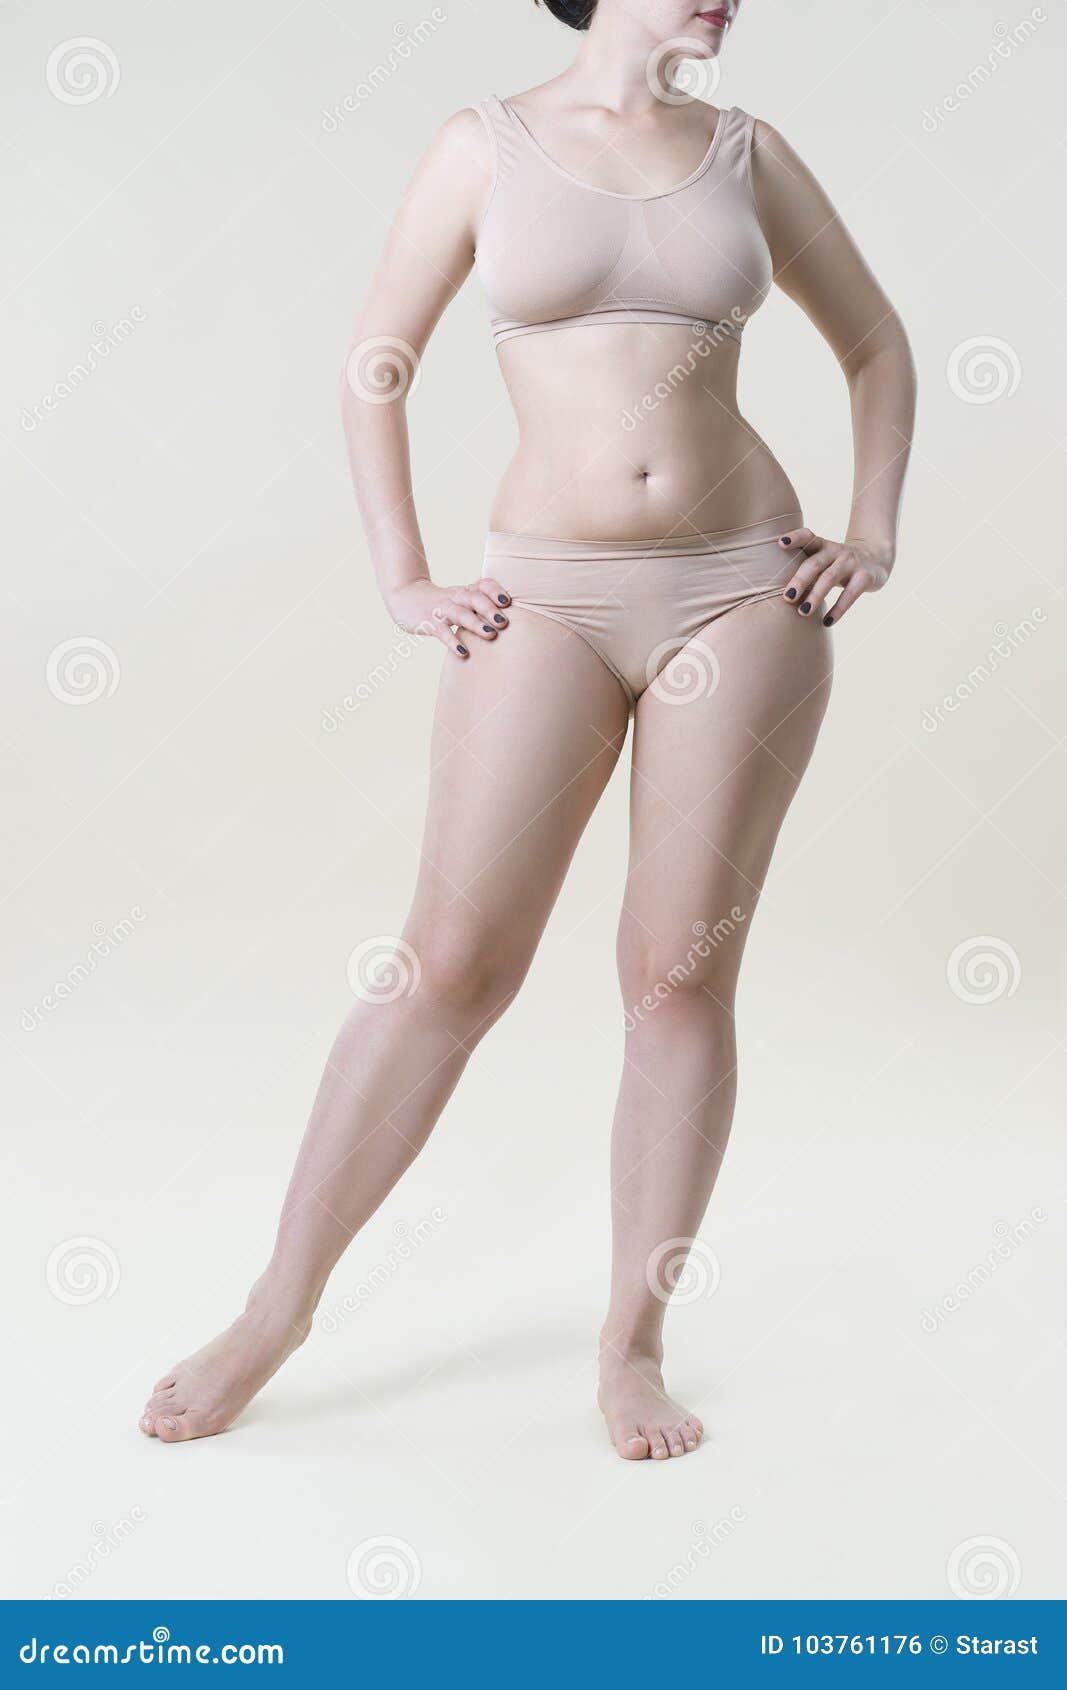 Mannequin cellulite A size